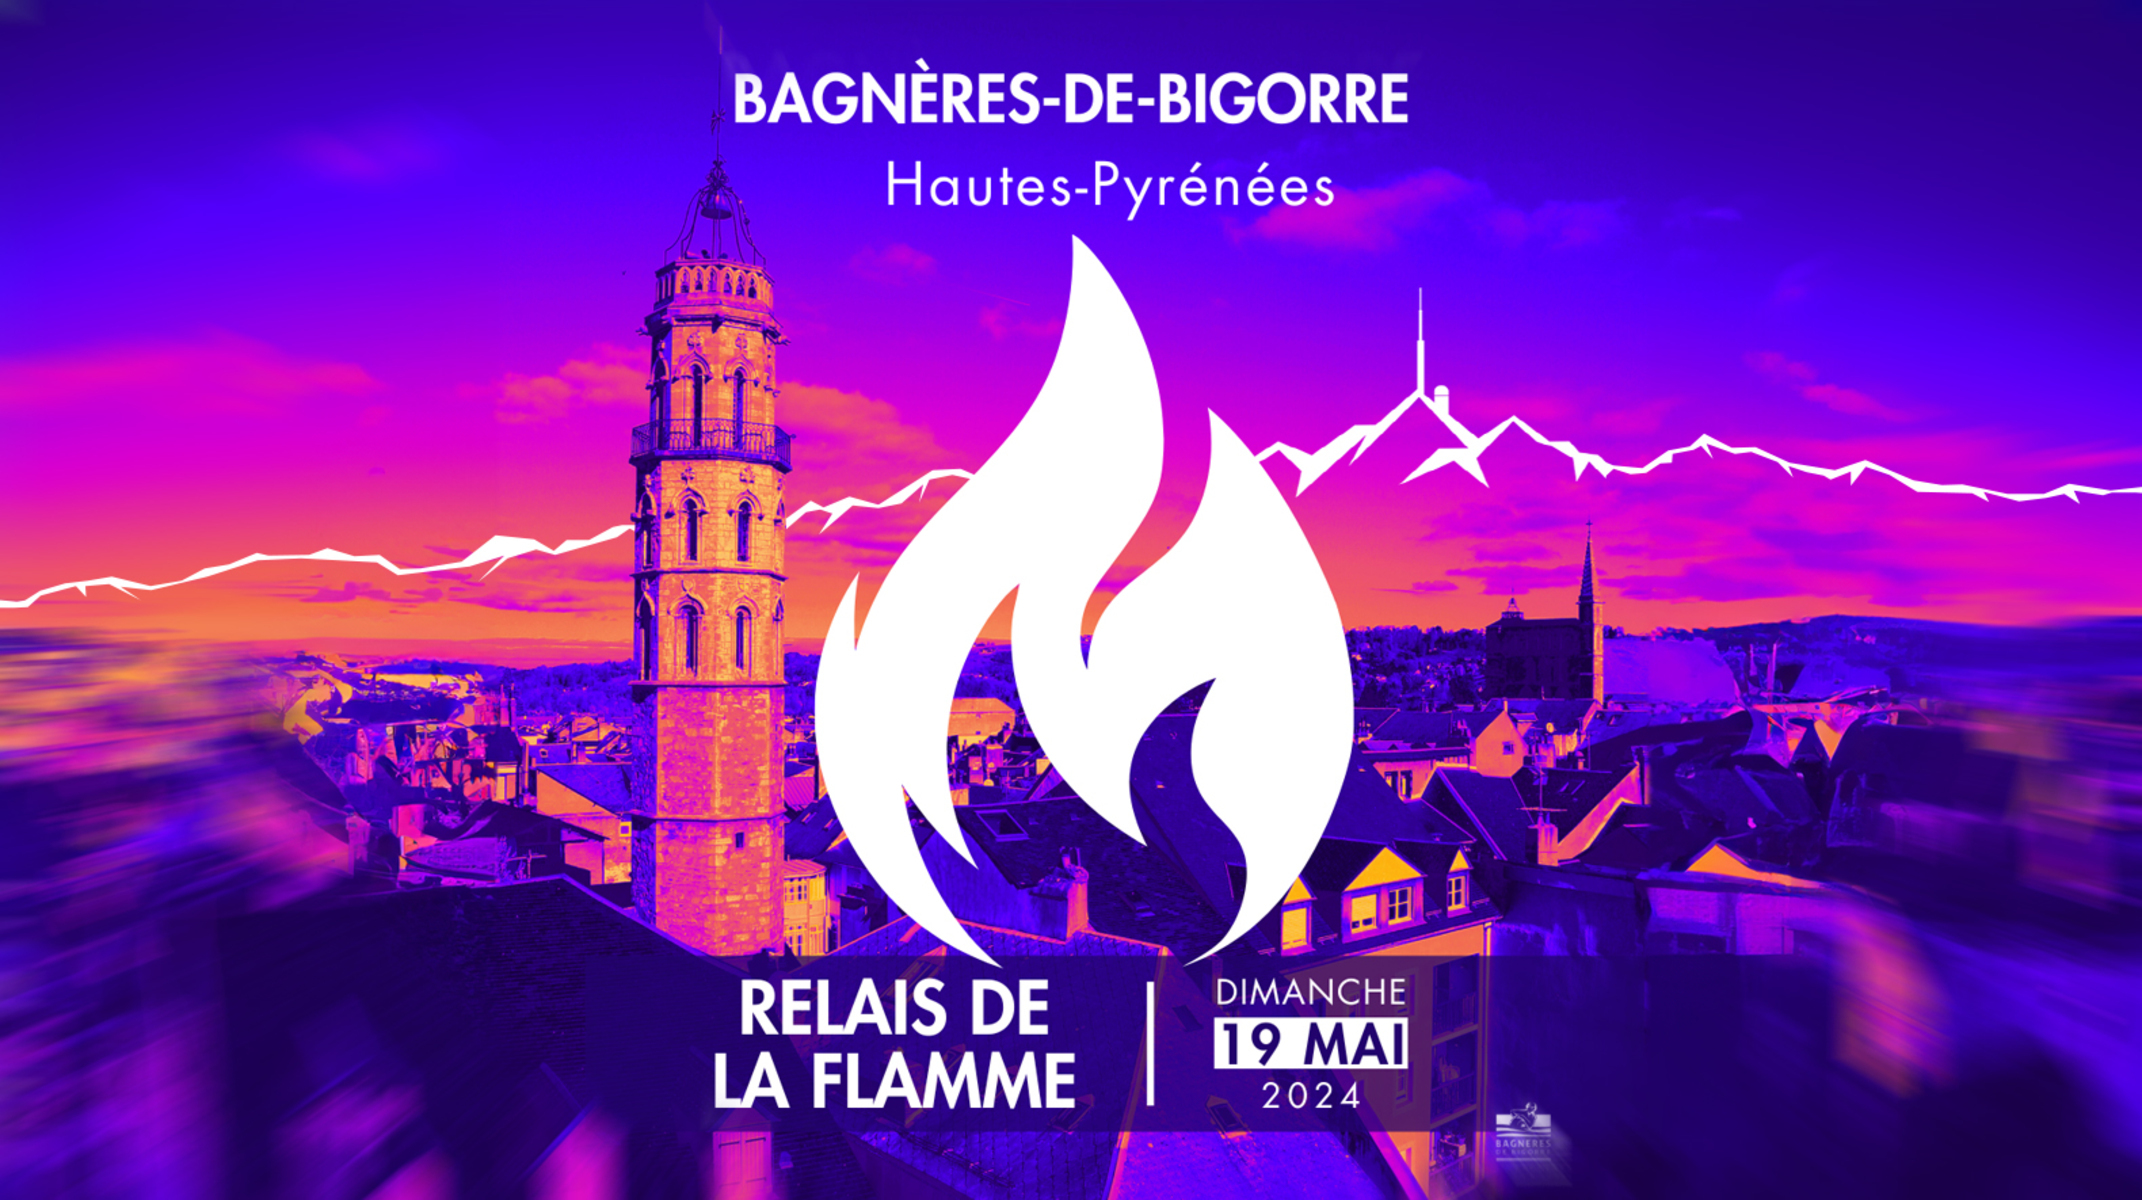 © Bagnères-de-Bigorre